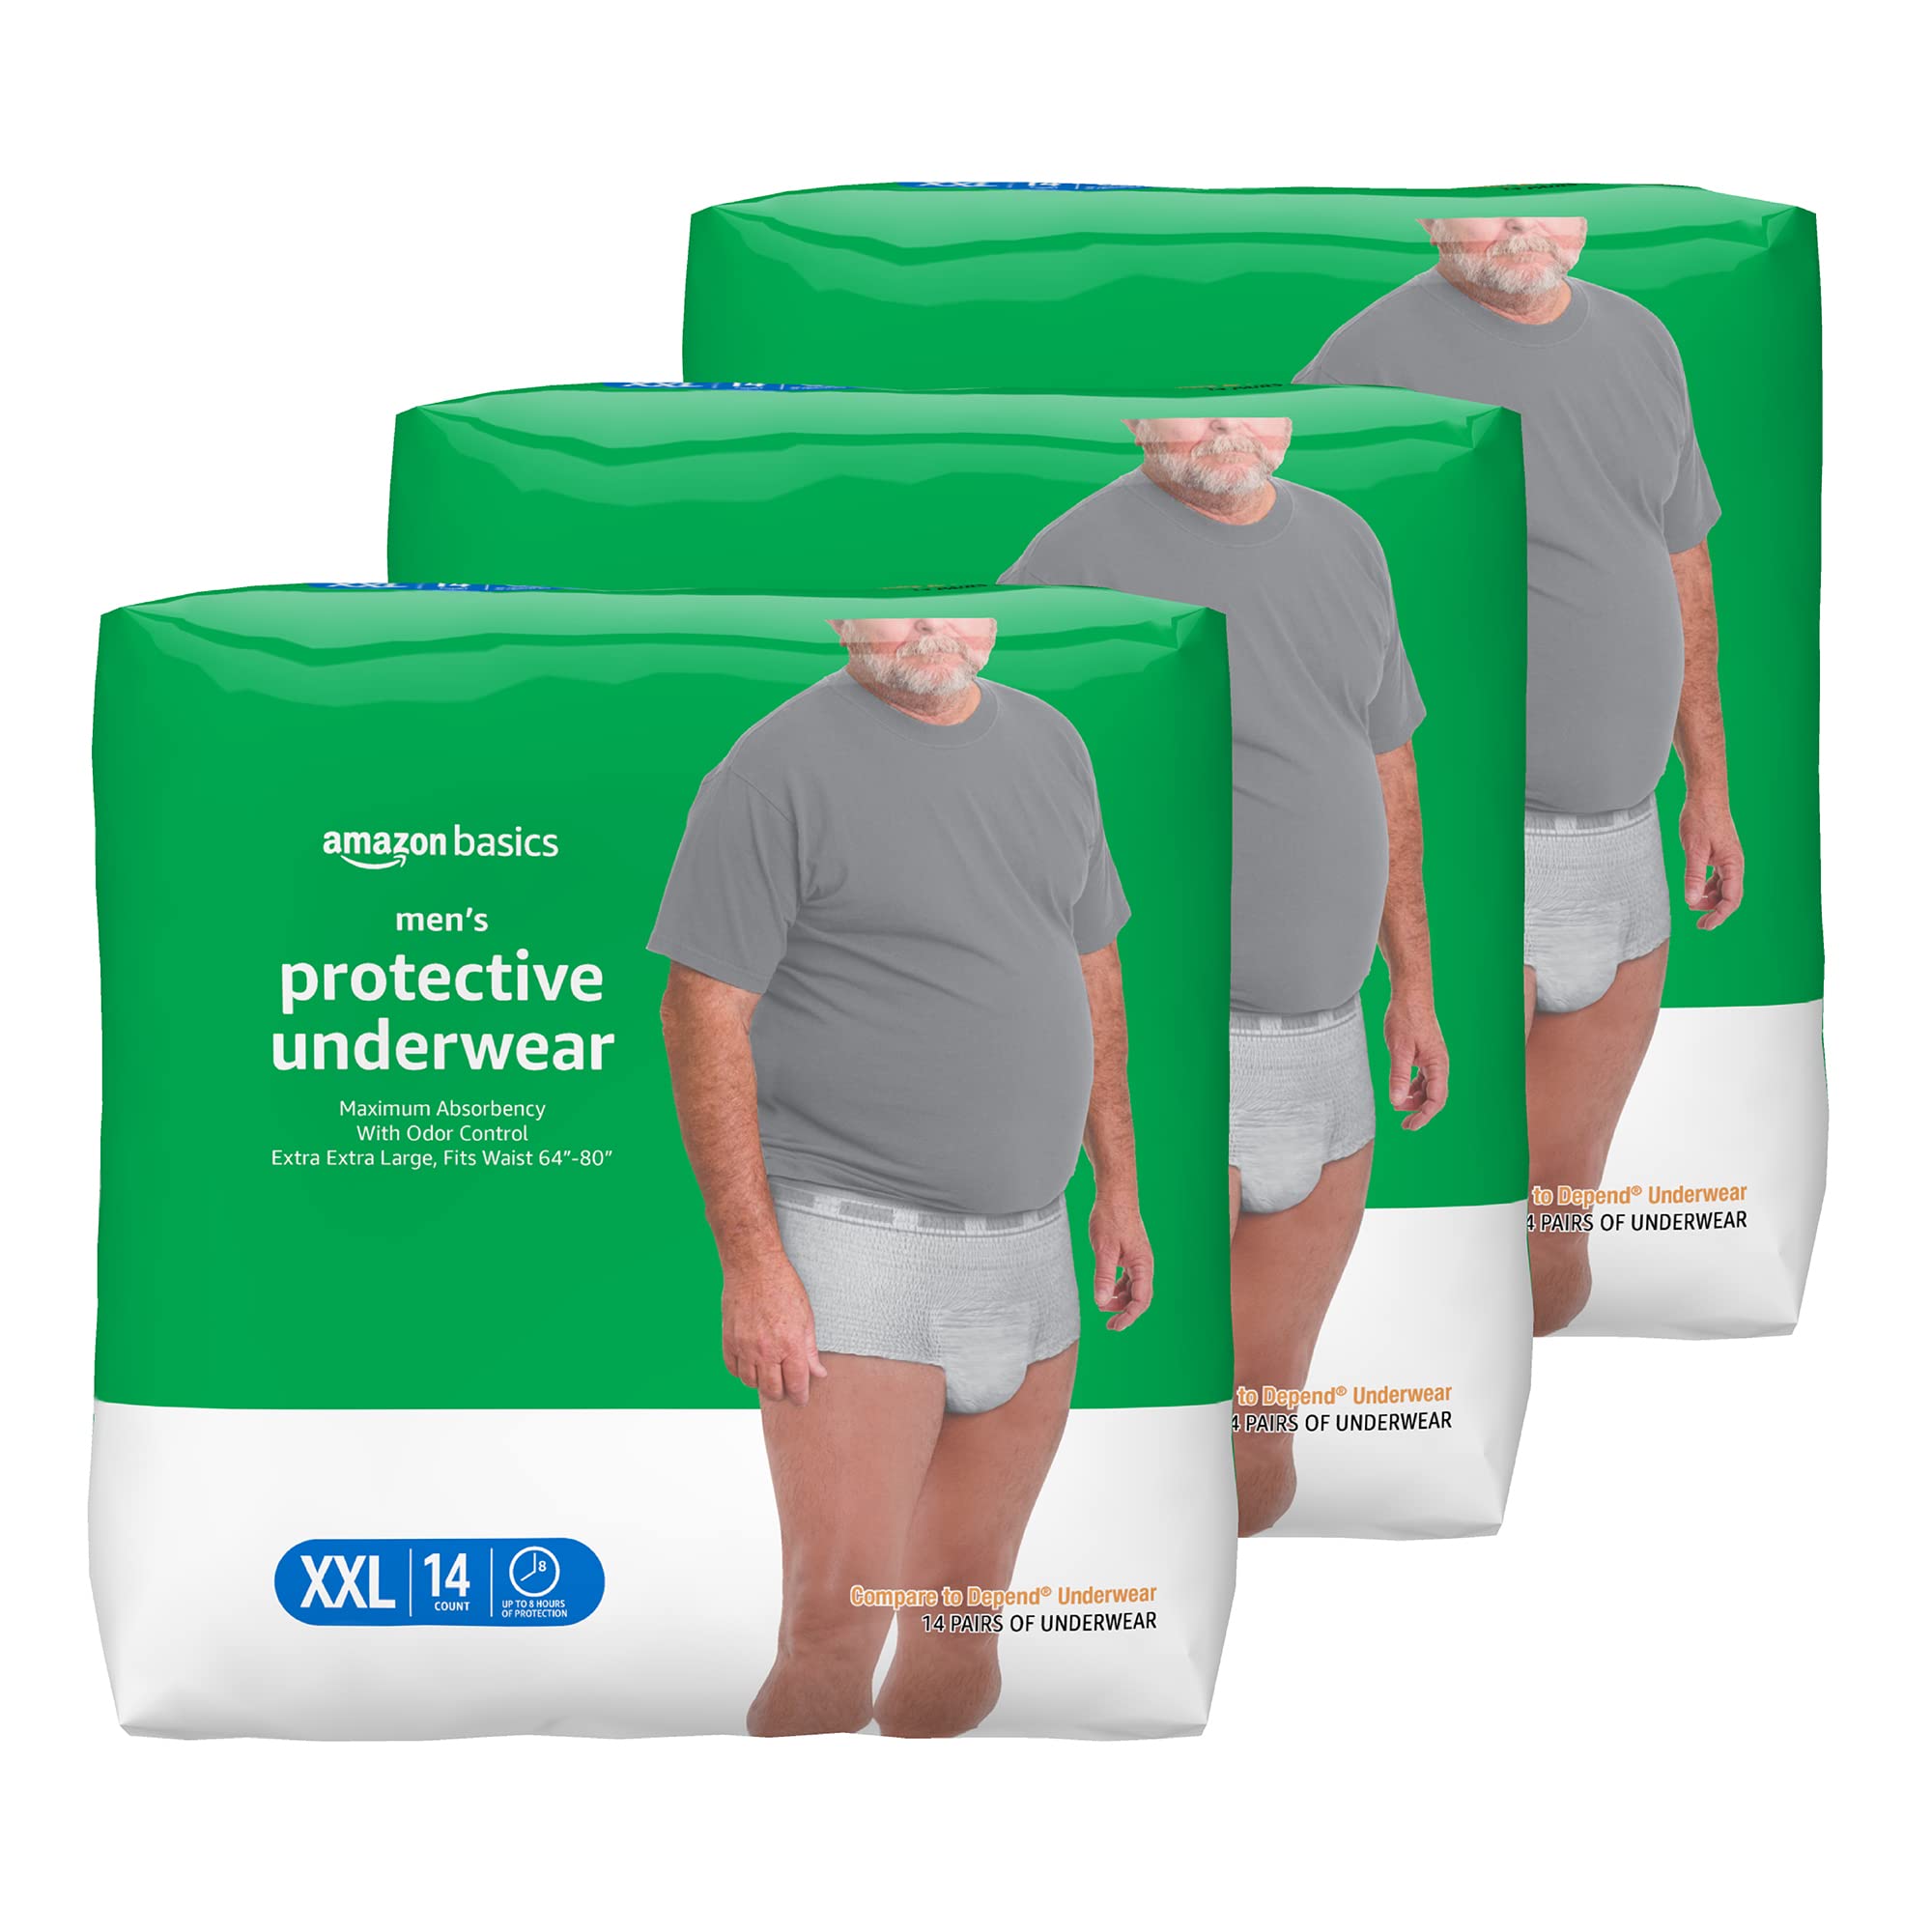 Depend Fresh Protection Fit-Flex Incontinence Underwear for Men Maximum XL  ✓